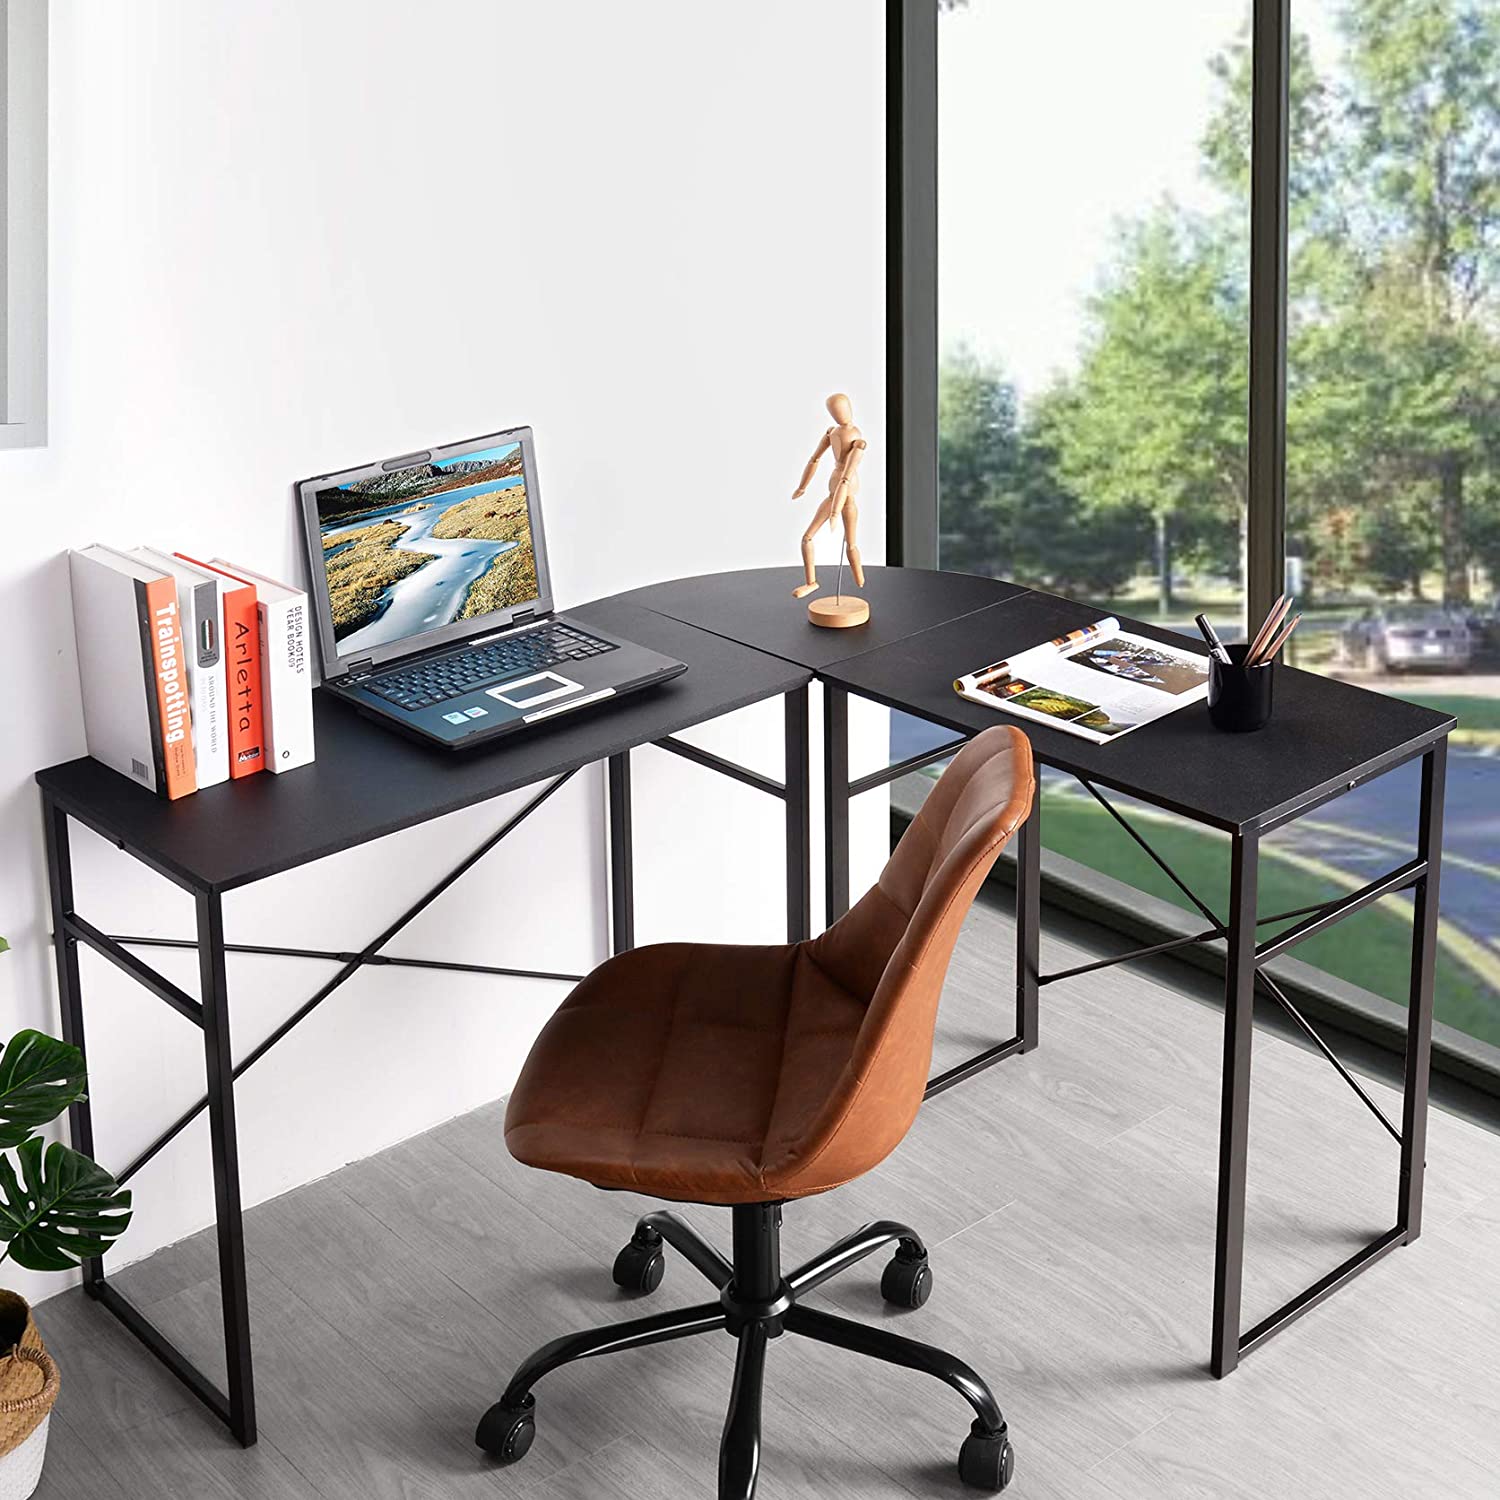 Skonyon L Shaped Desk (Black) for $69.97 + Free Shipping